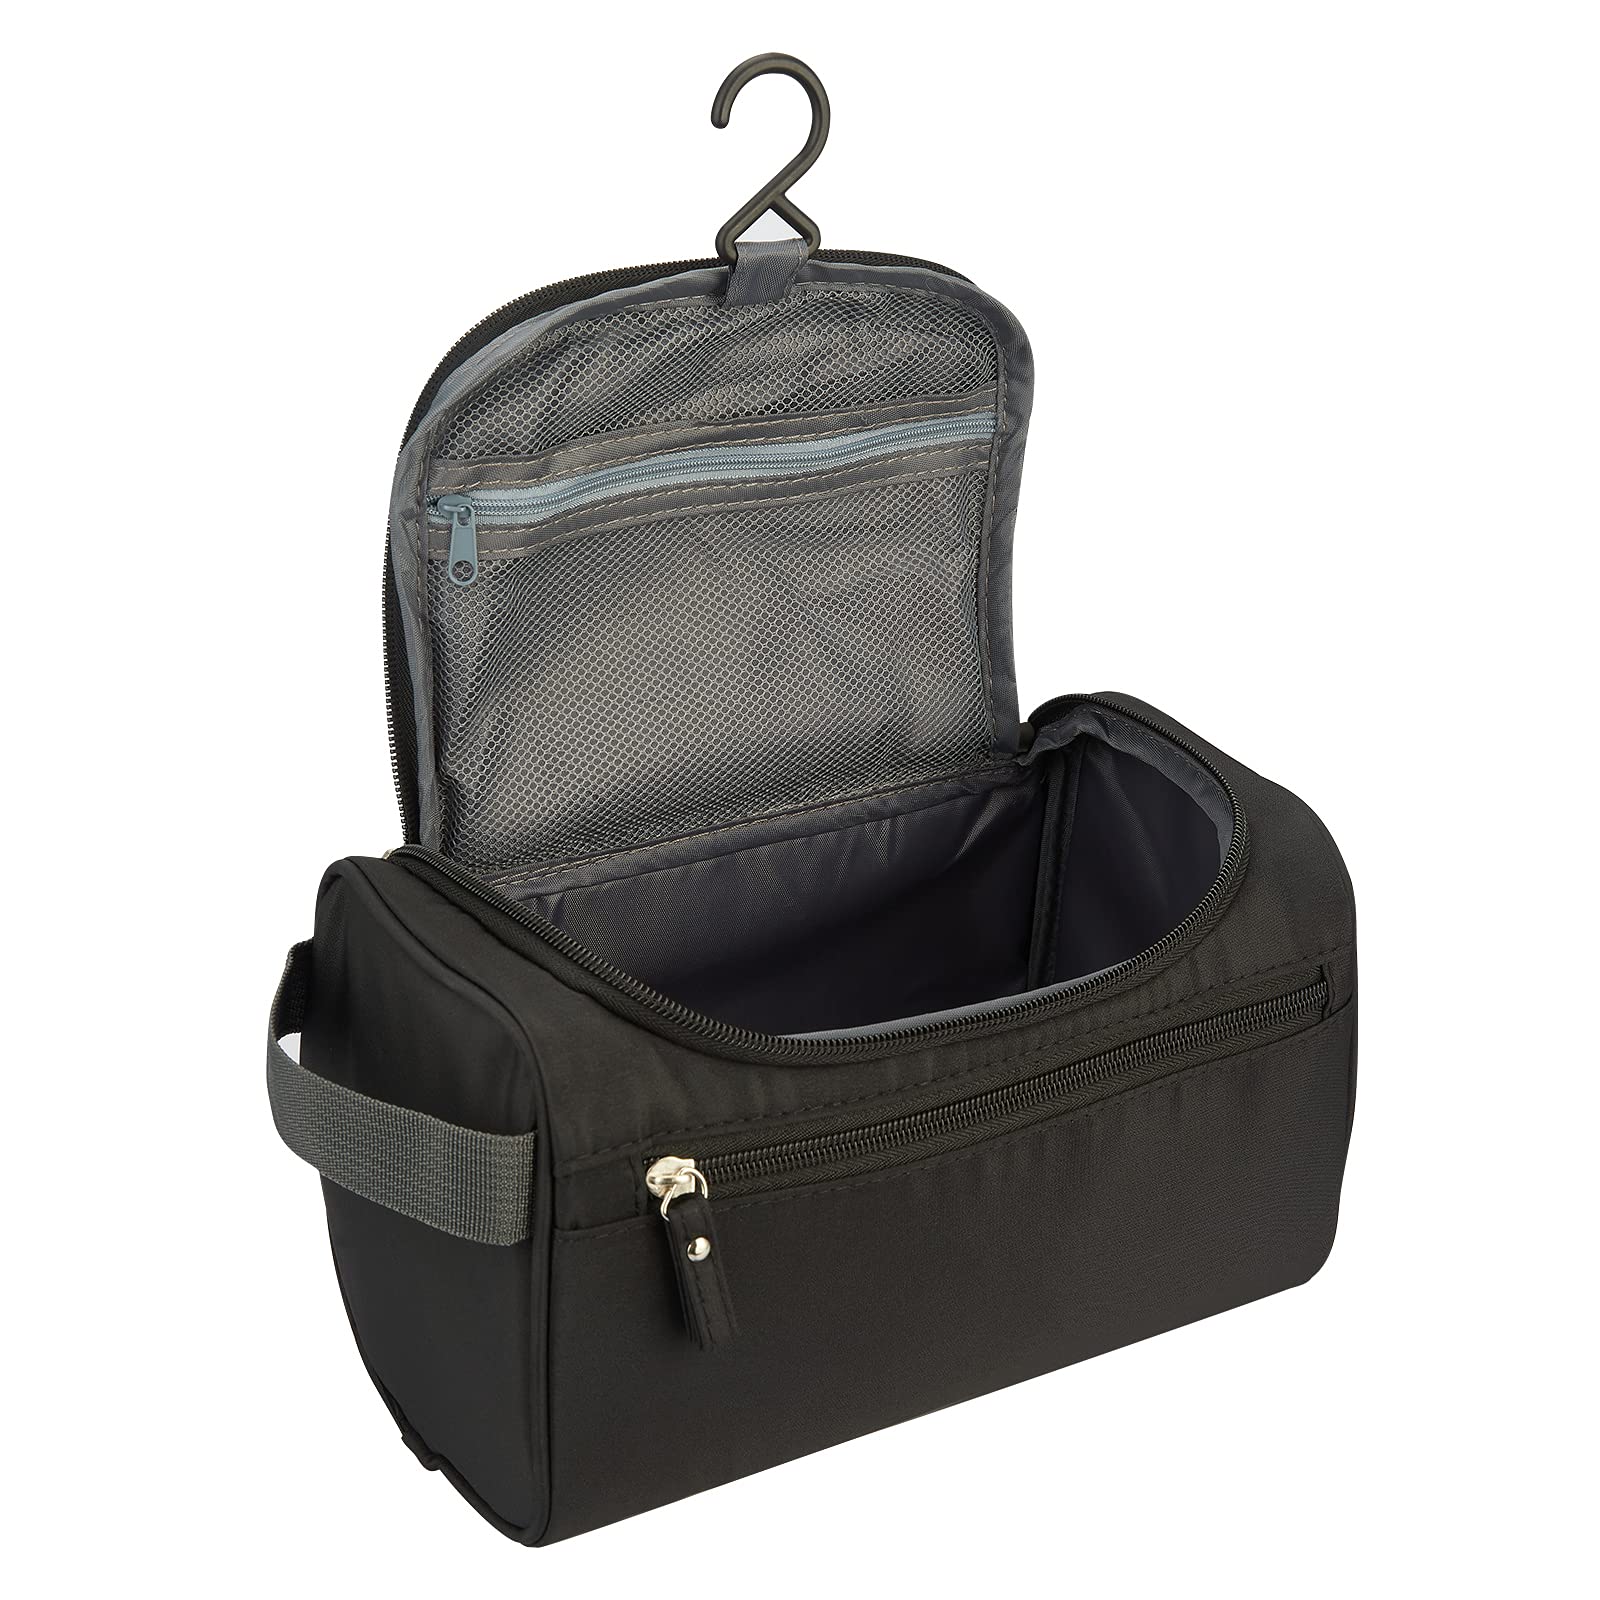 Toiletry Bag for Men,Travel Toiletry Bag,Travel Bag,Wash Bag for